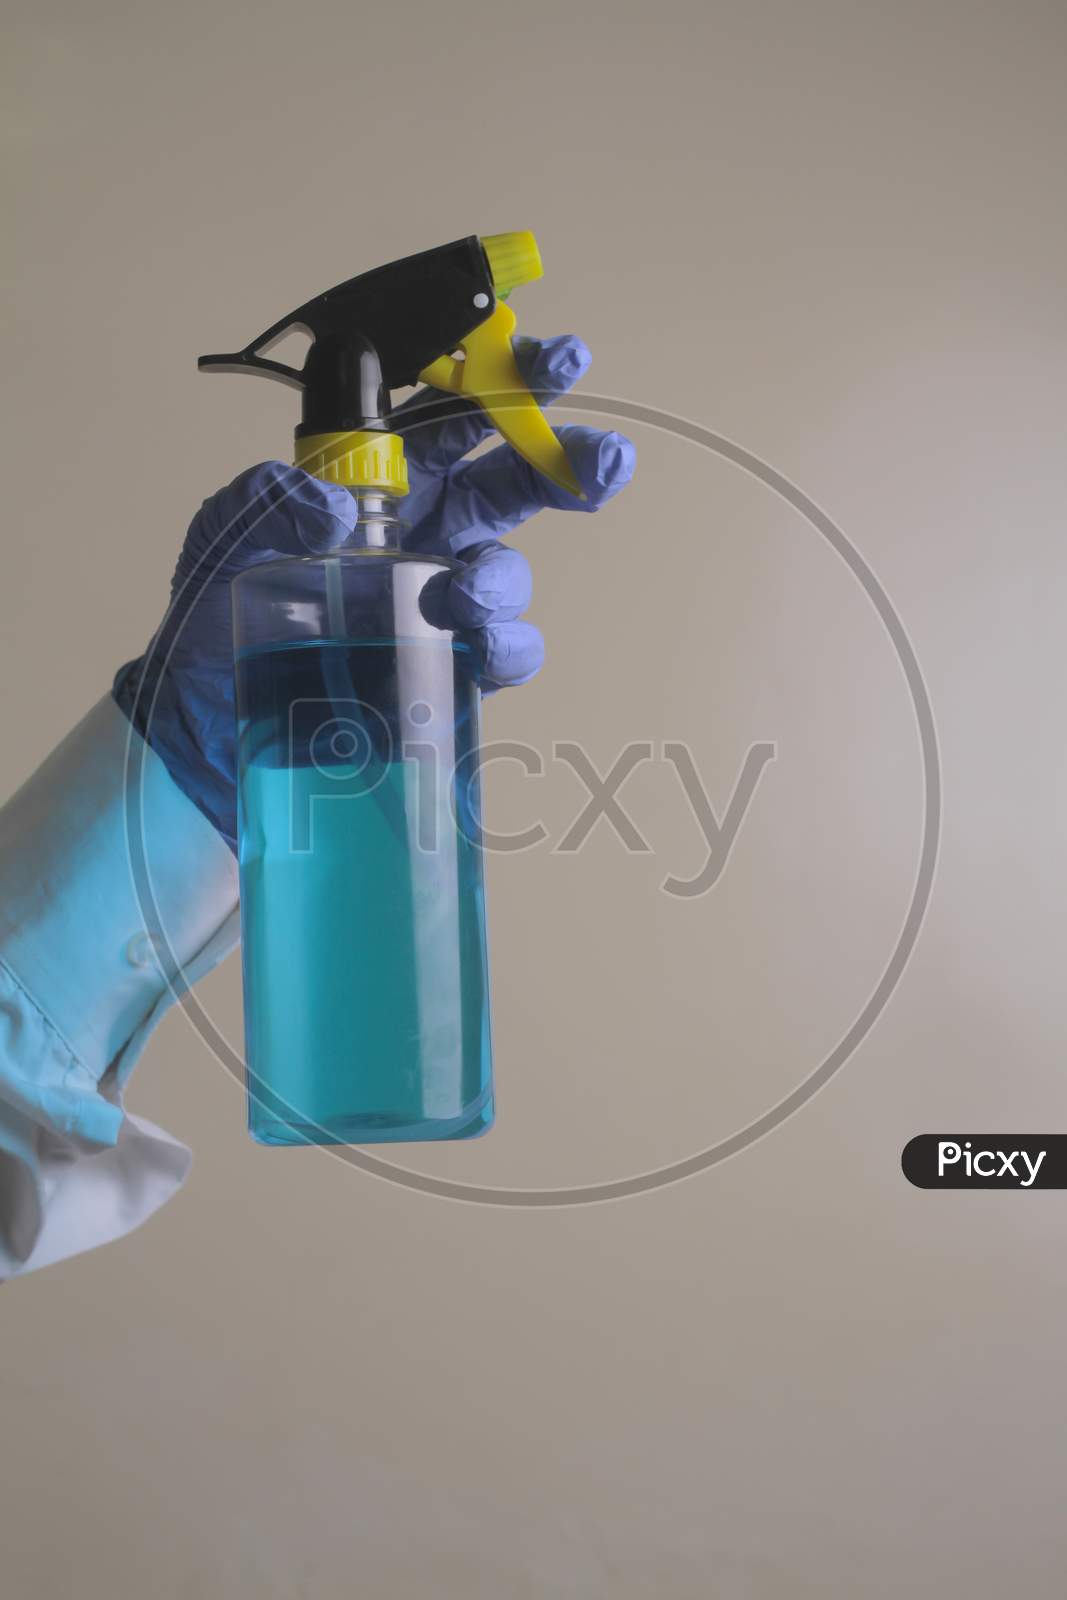 Spraying Anti-Bacterial Sanitizer Spray, Hand Sanitizer Dispenser, Infection Control Concept. Sanitizer To Prevent Colds, Virus, Coronavirus, Flu. Spray Bottle. Alcohol Spray.